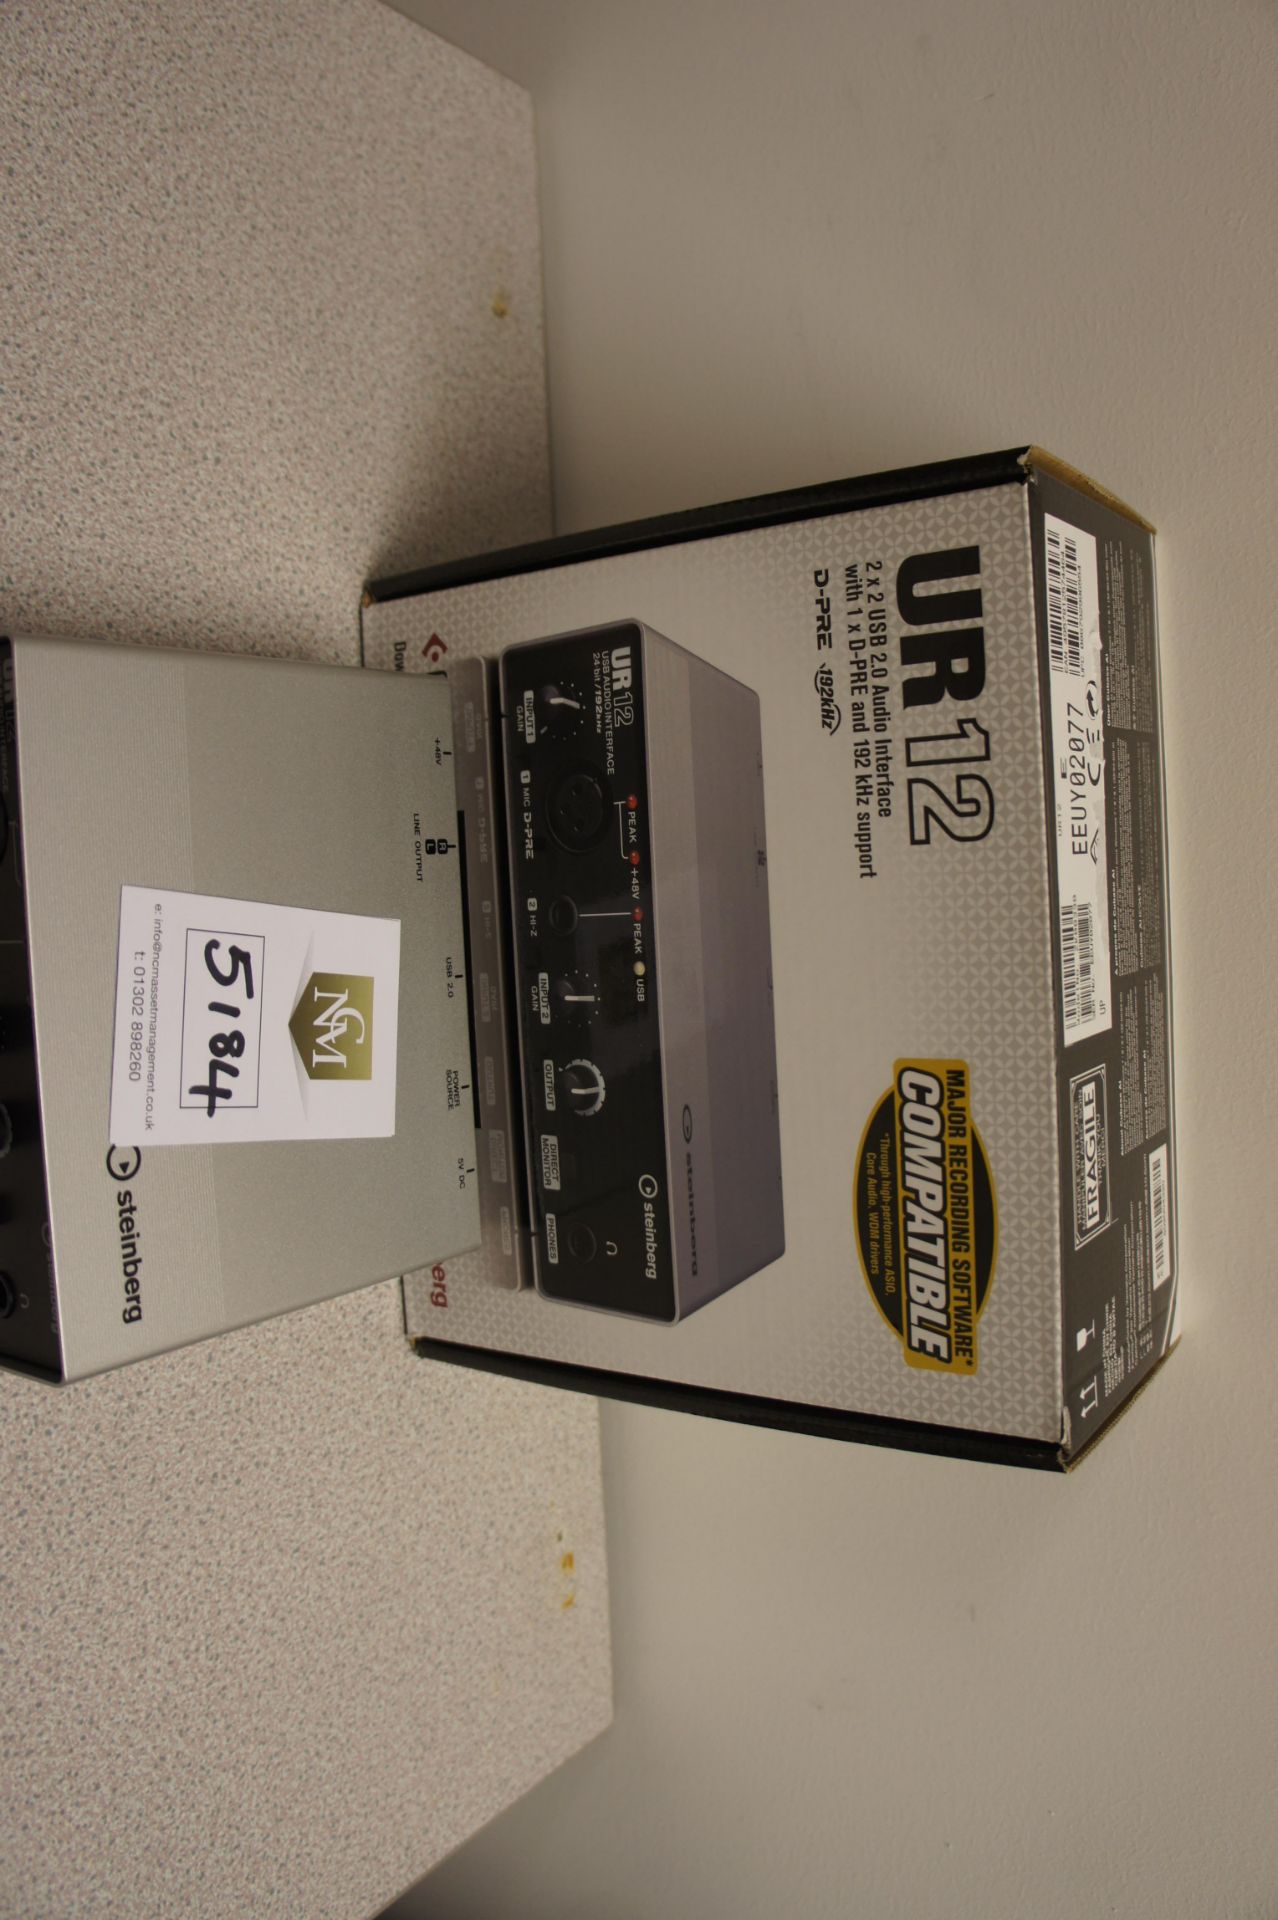 UR12 2 x 2 USB 20 Audio Interface - Image 2 of 2